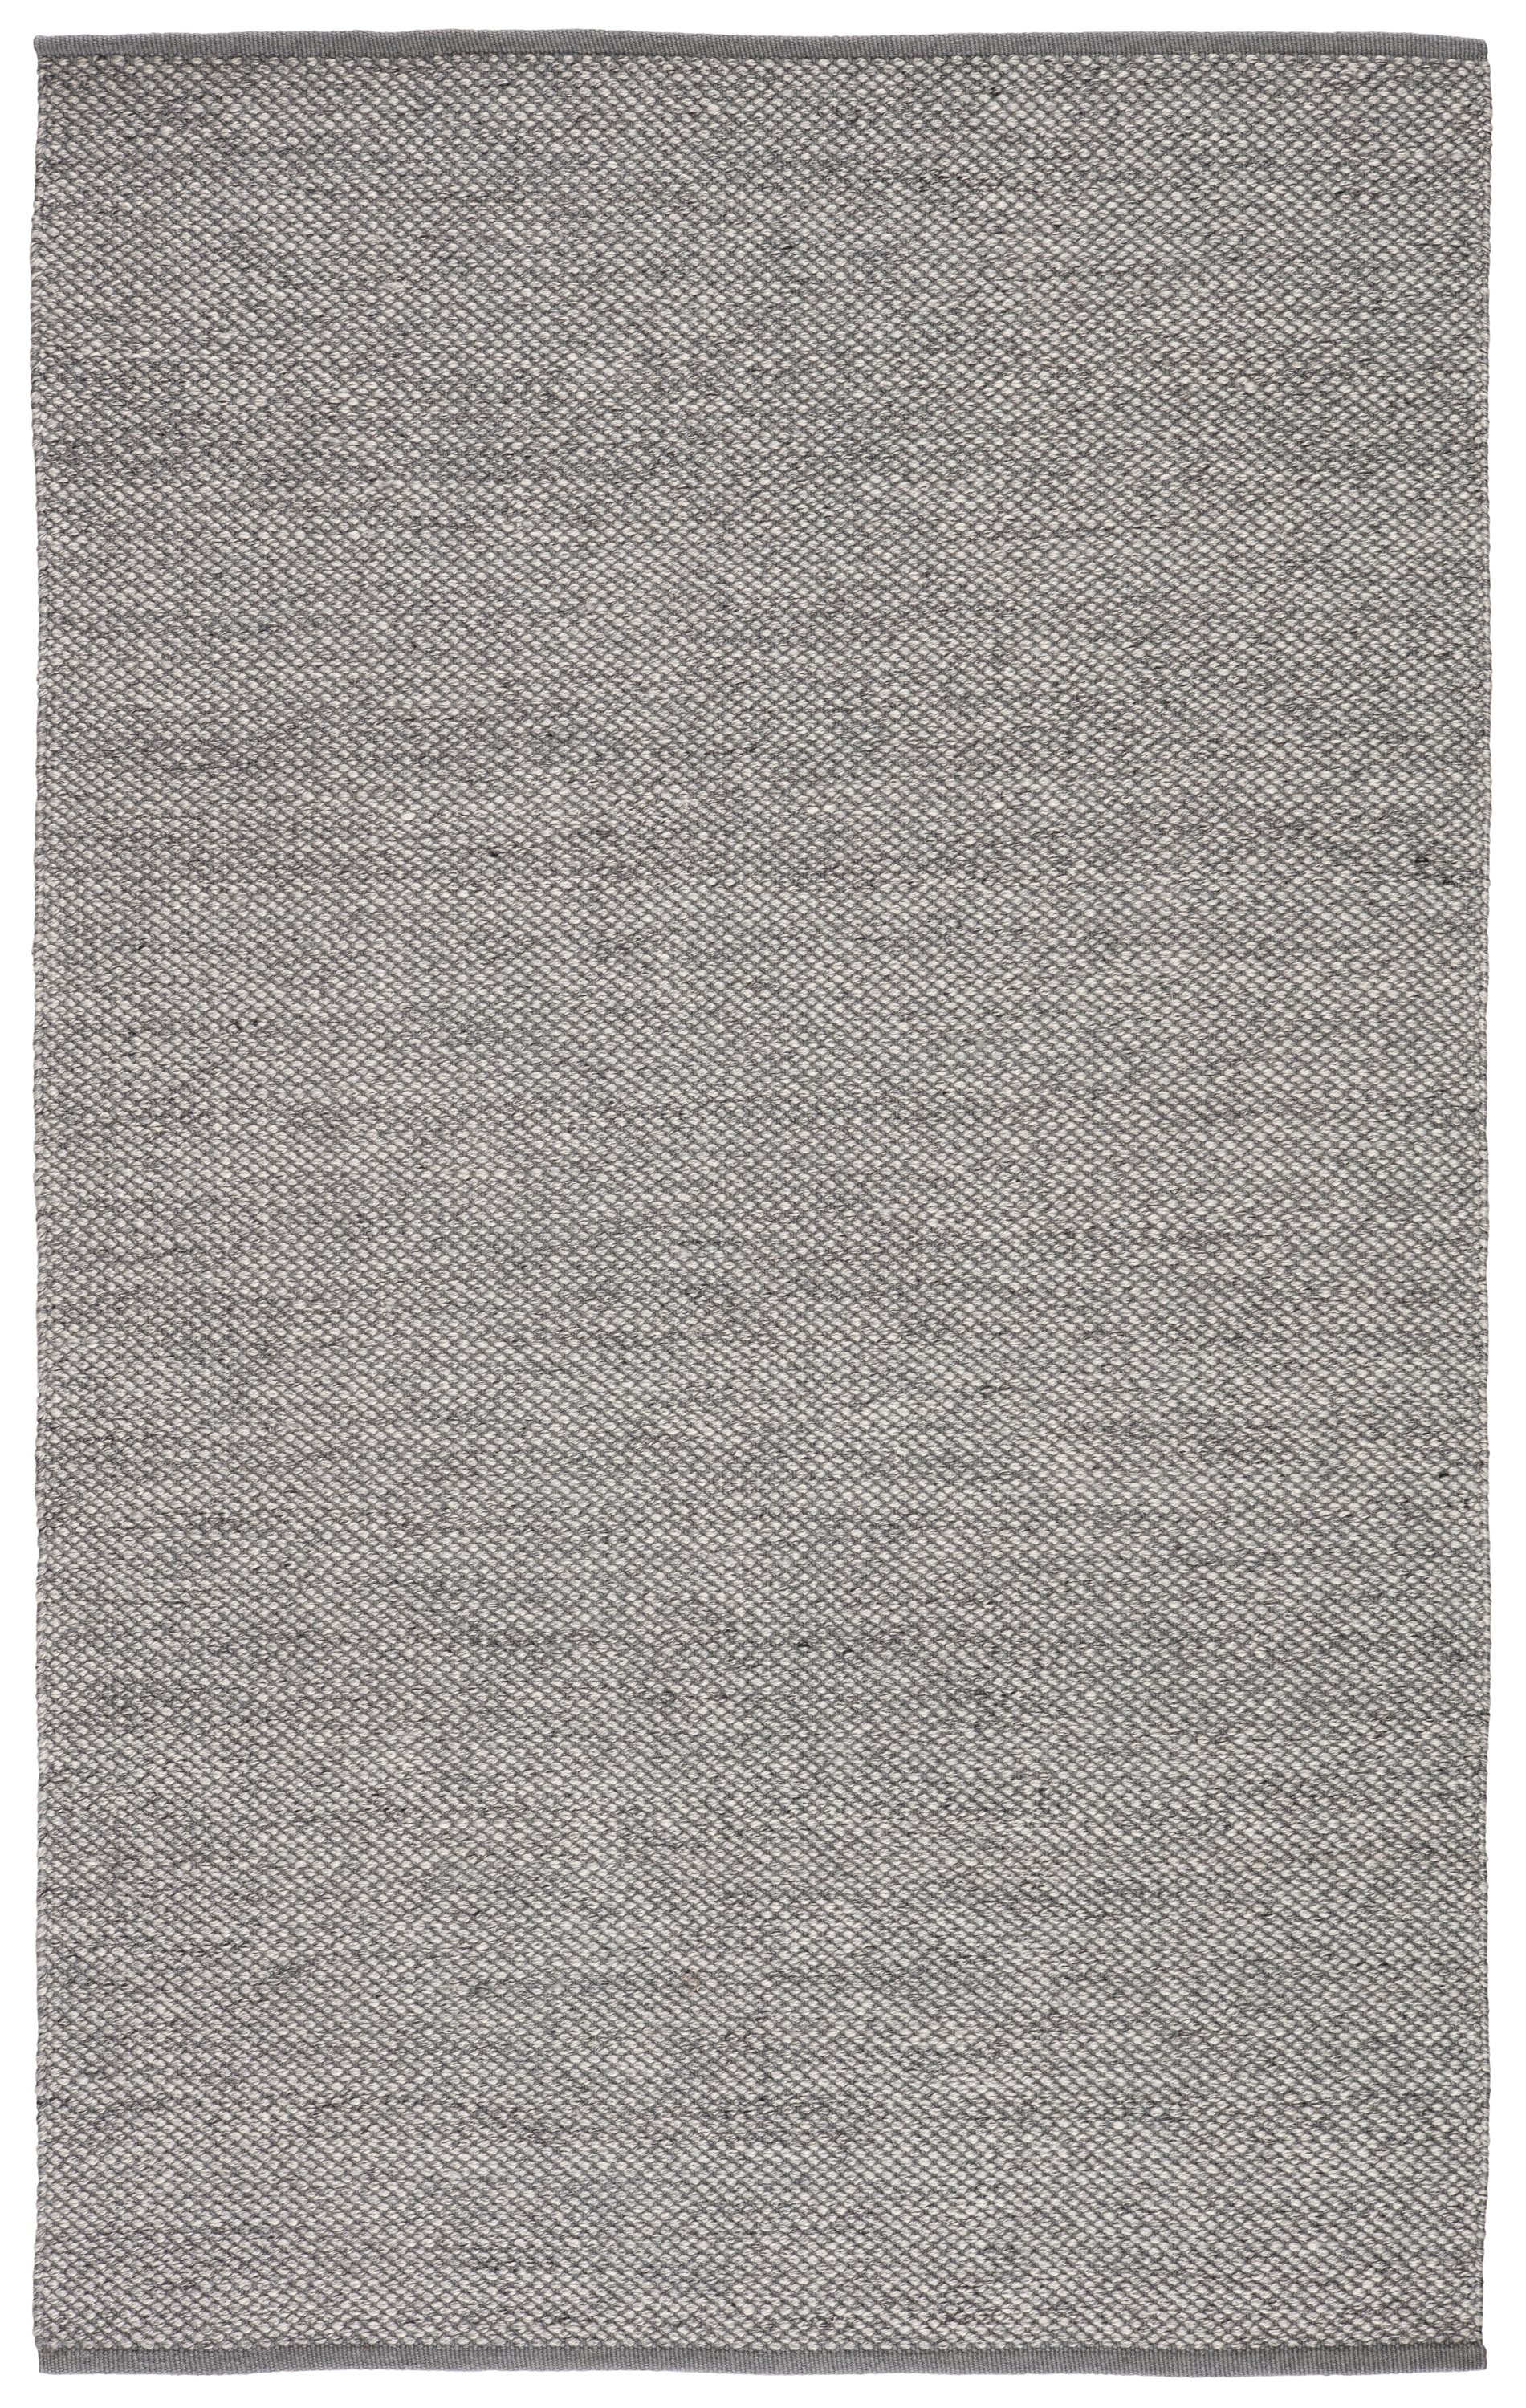 Lamanda Indoor/ Outdoor Solid Gray/ Ivory Area Rug (8'X10') - Image 0